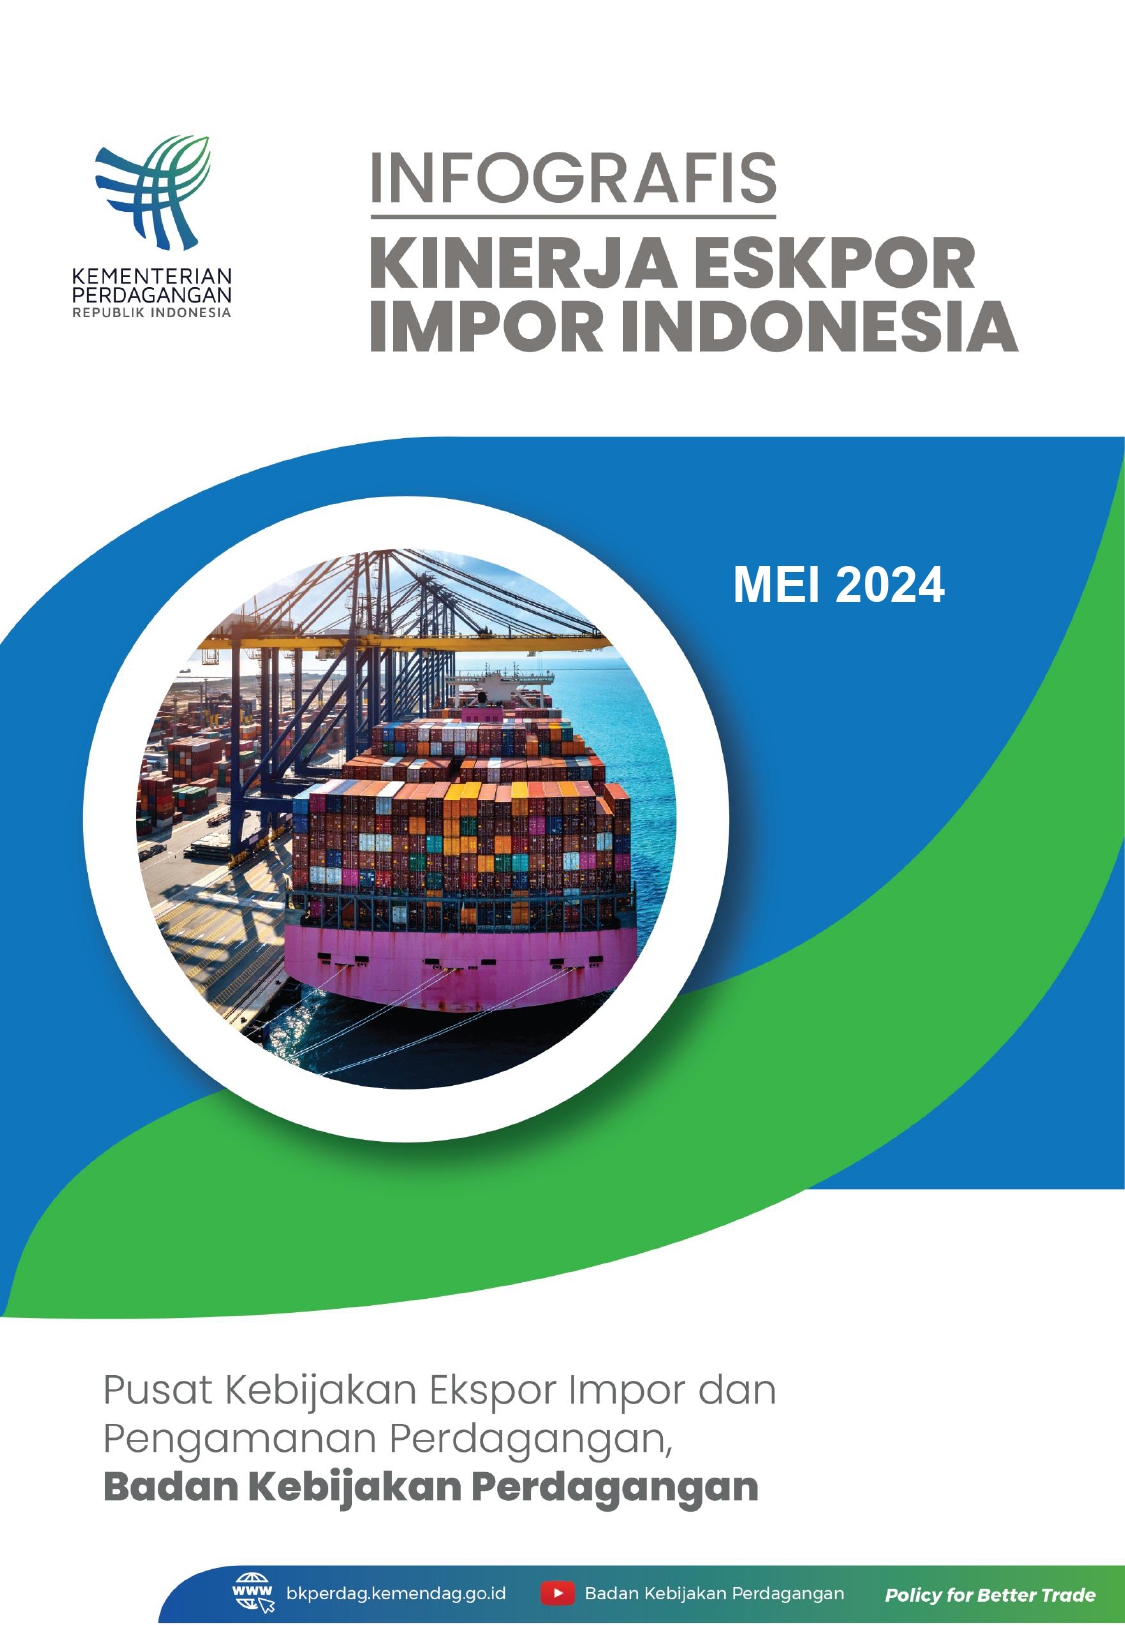 Kinerja Ekspor Impor Indonesia Periode Mei Tahun 2024